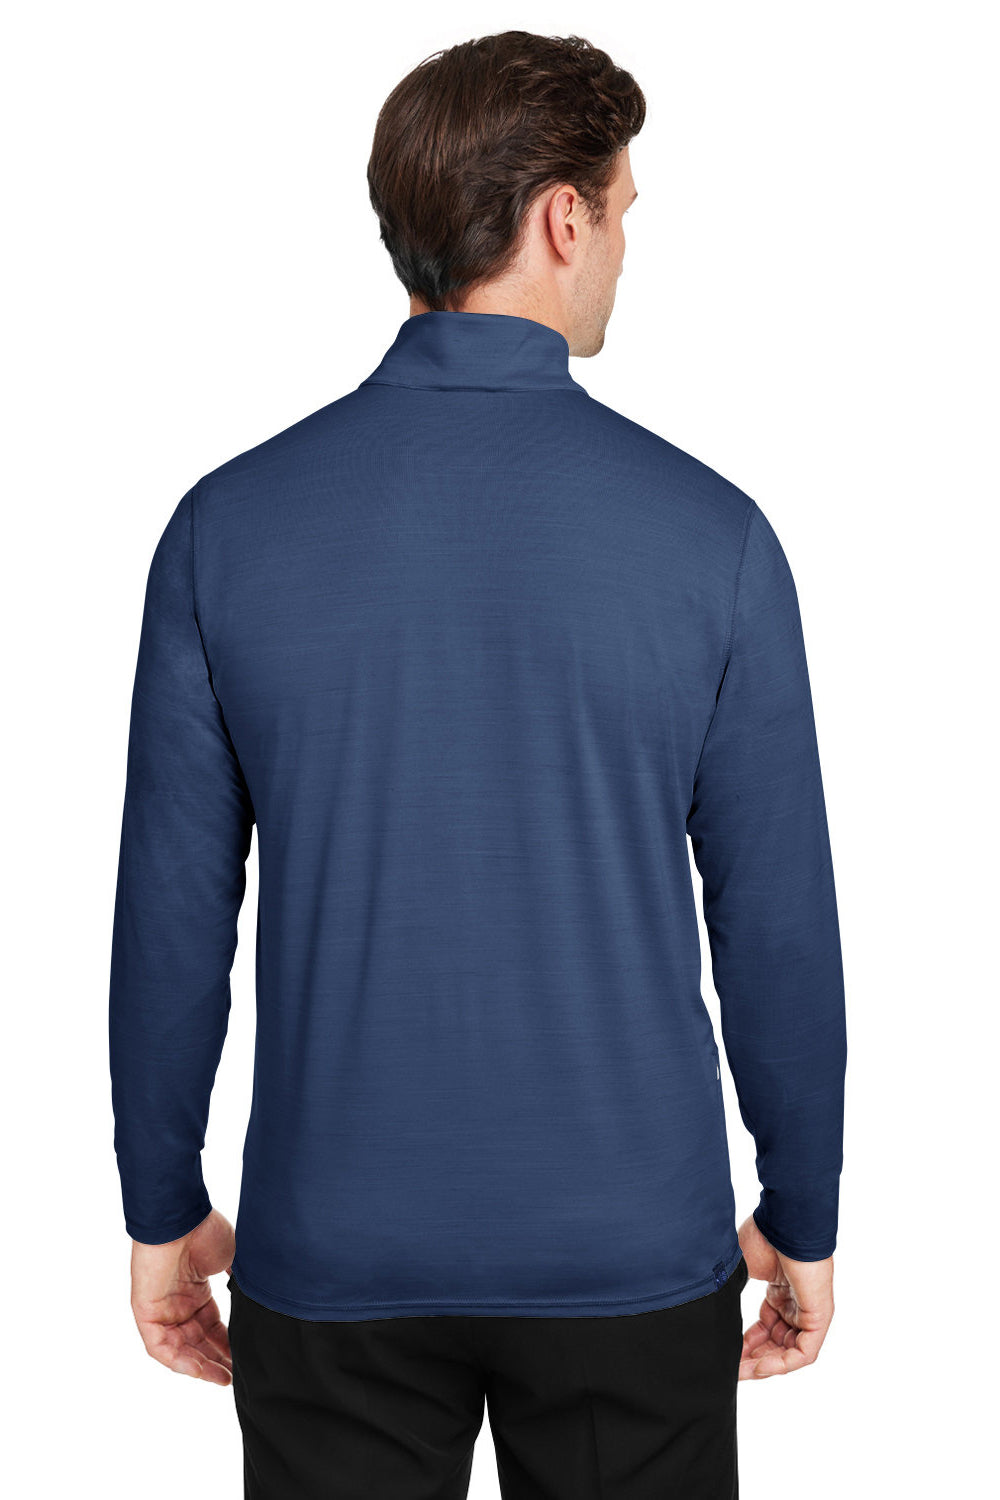 Puma 532016 Mens Cloudspun 1/4 Zip Sweatshirt Heather Navy Blue Back